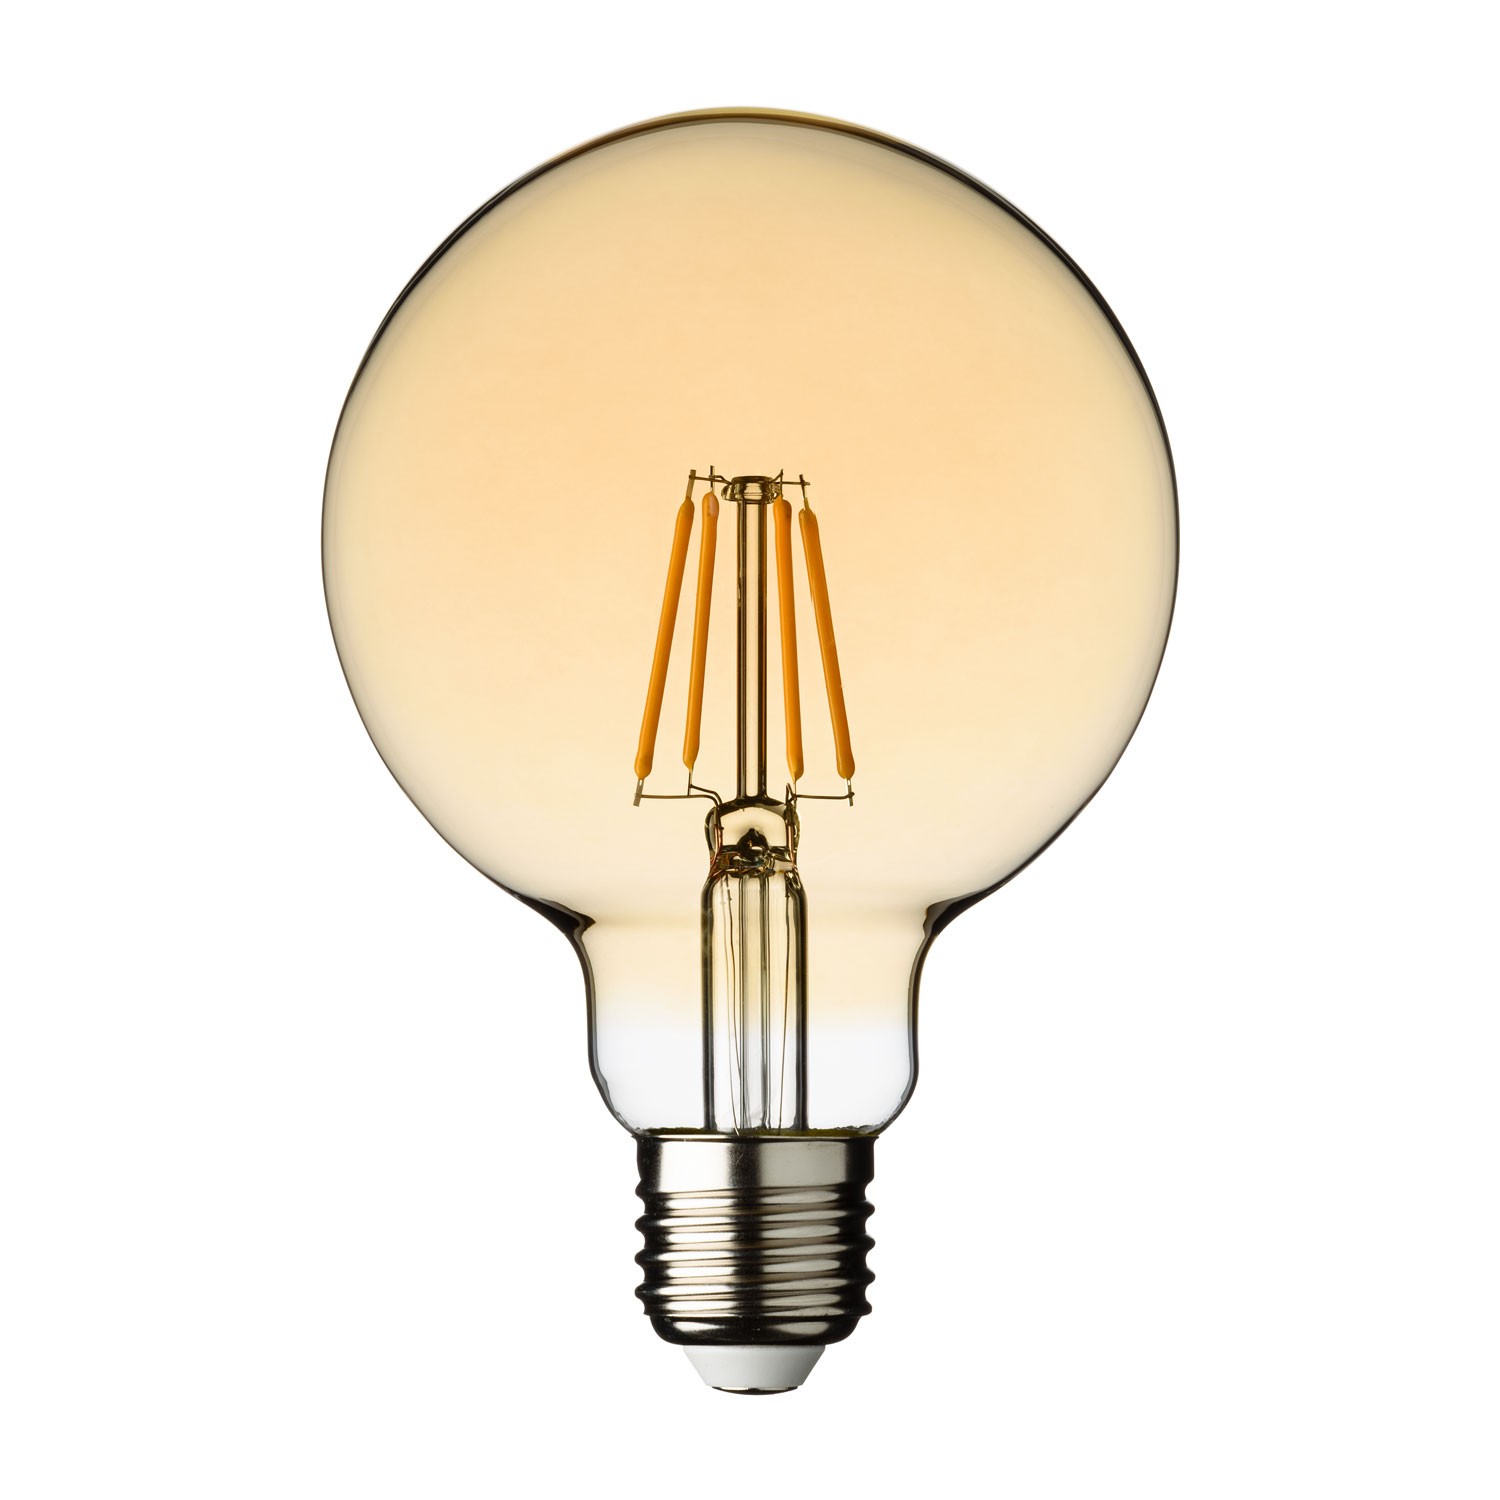 4 pezzi knaggen LED lampade a incandescenza 19v pere come 60015/600150 BIANCO CALDO LED NUOVO 